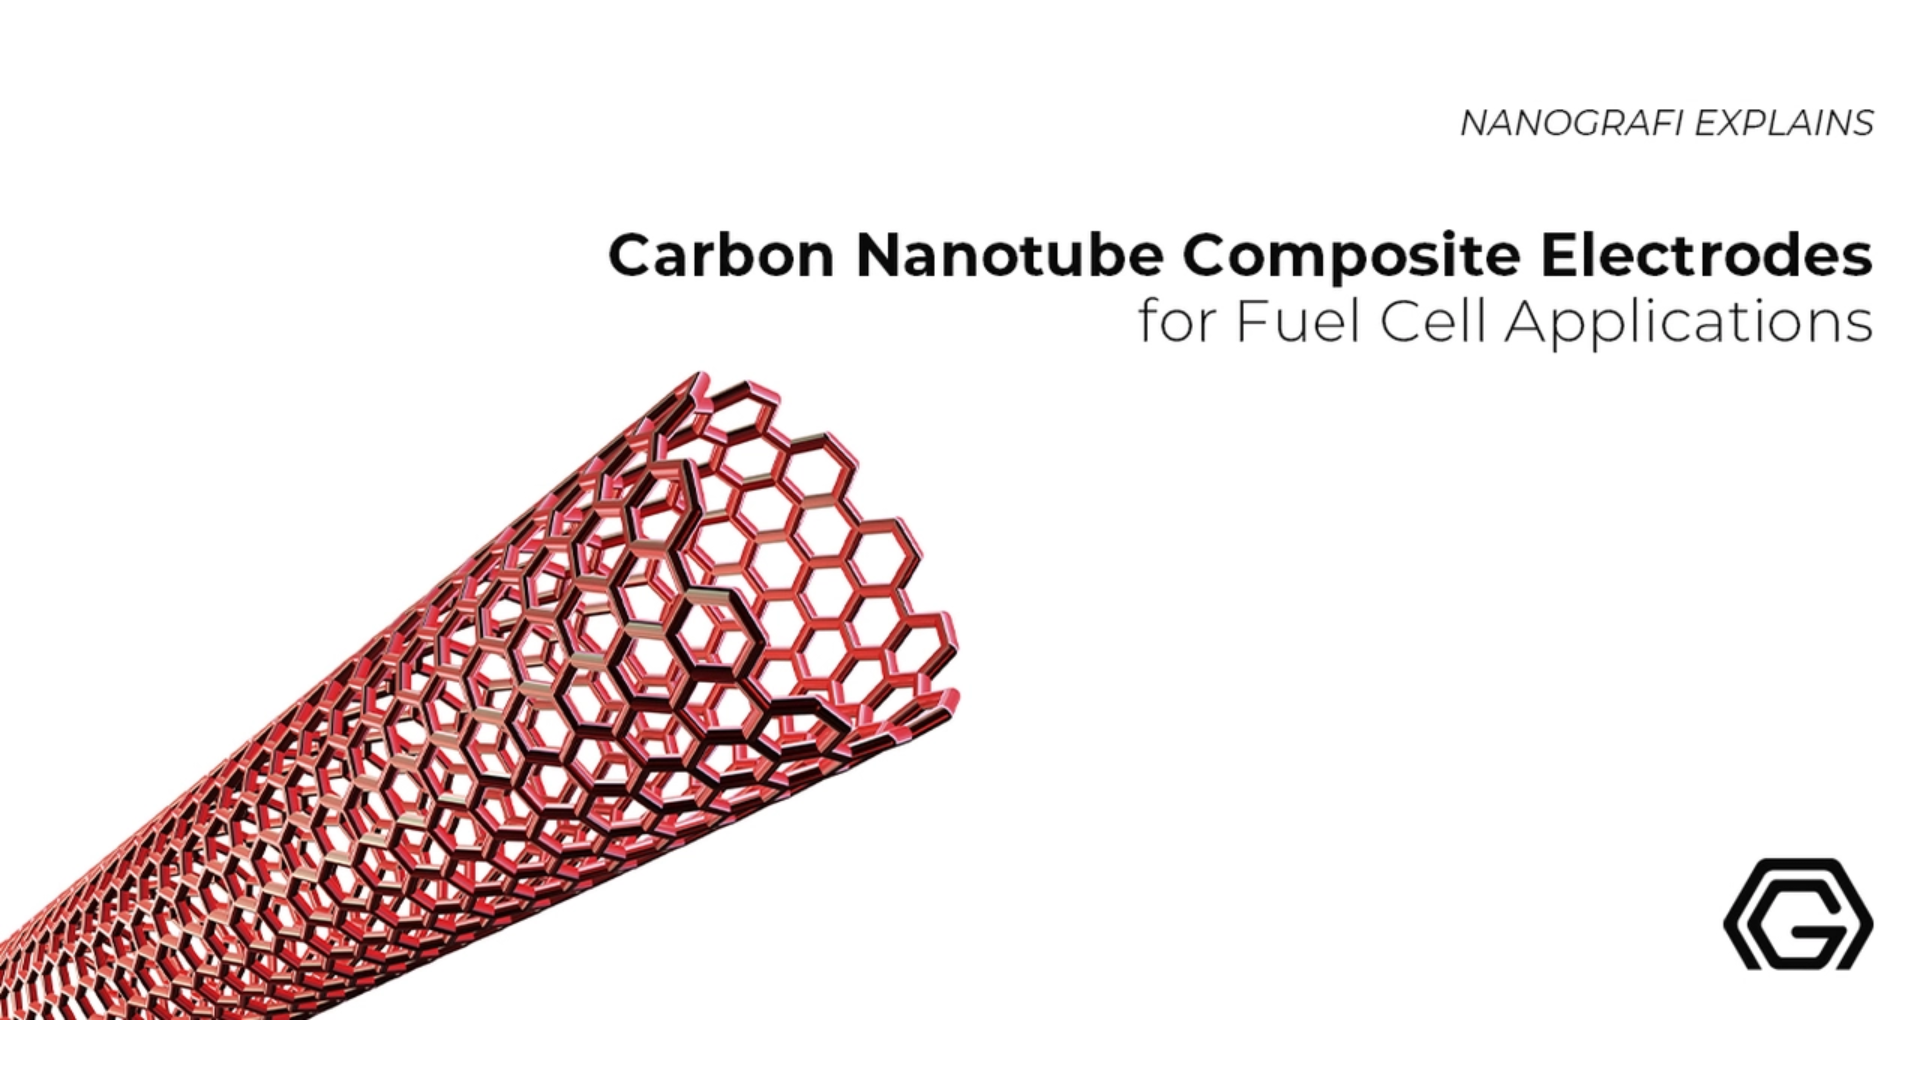 Carbon nanotube composite electrodes for fuel cell applications